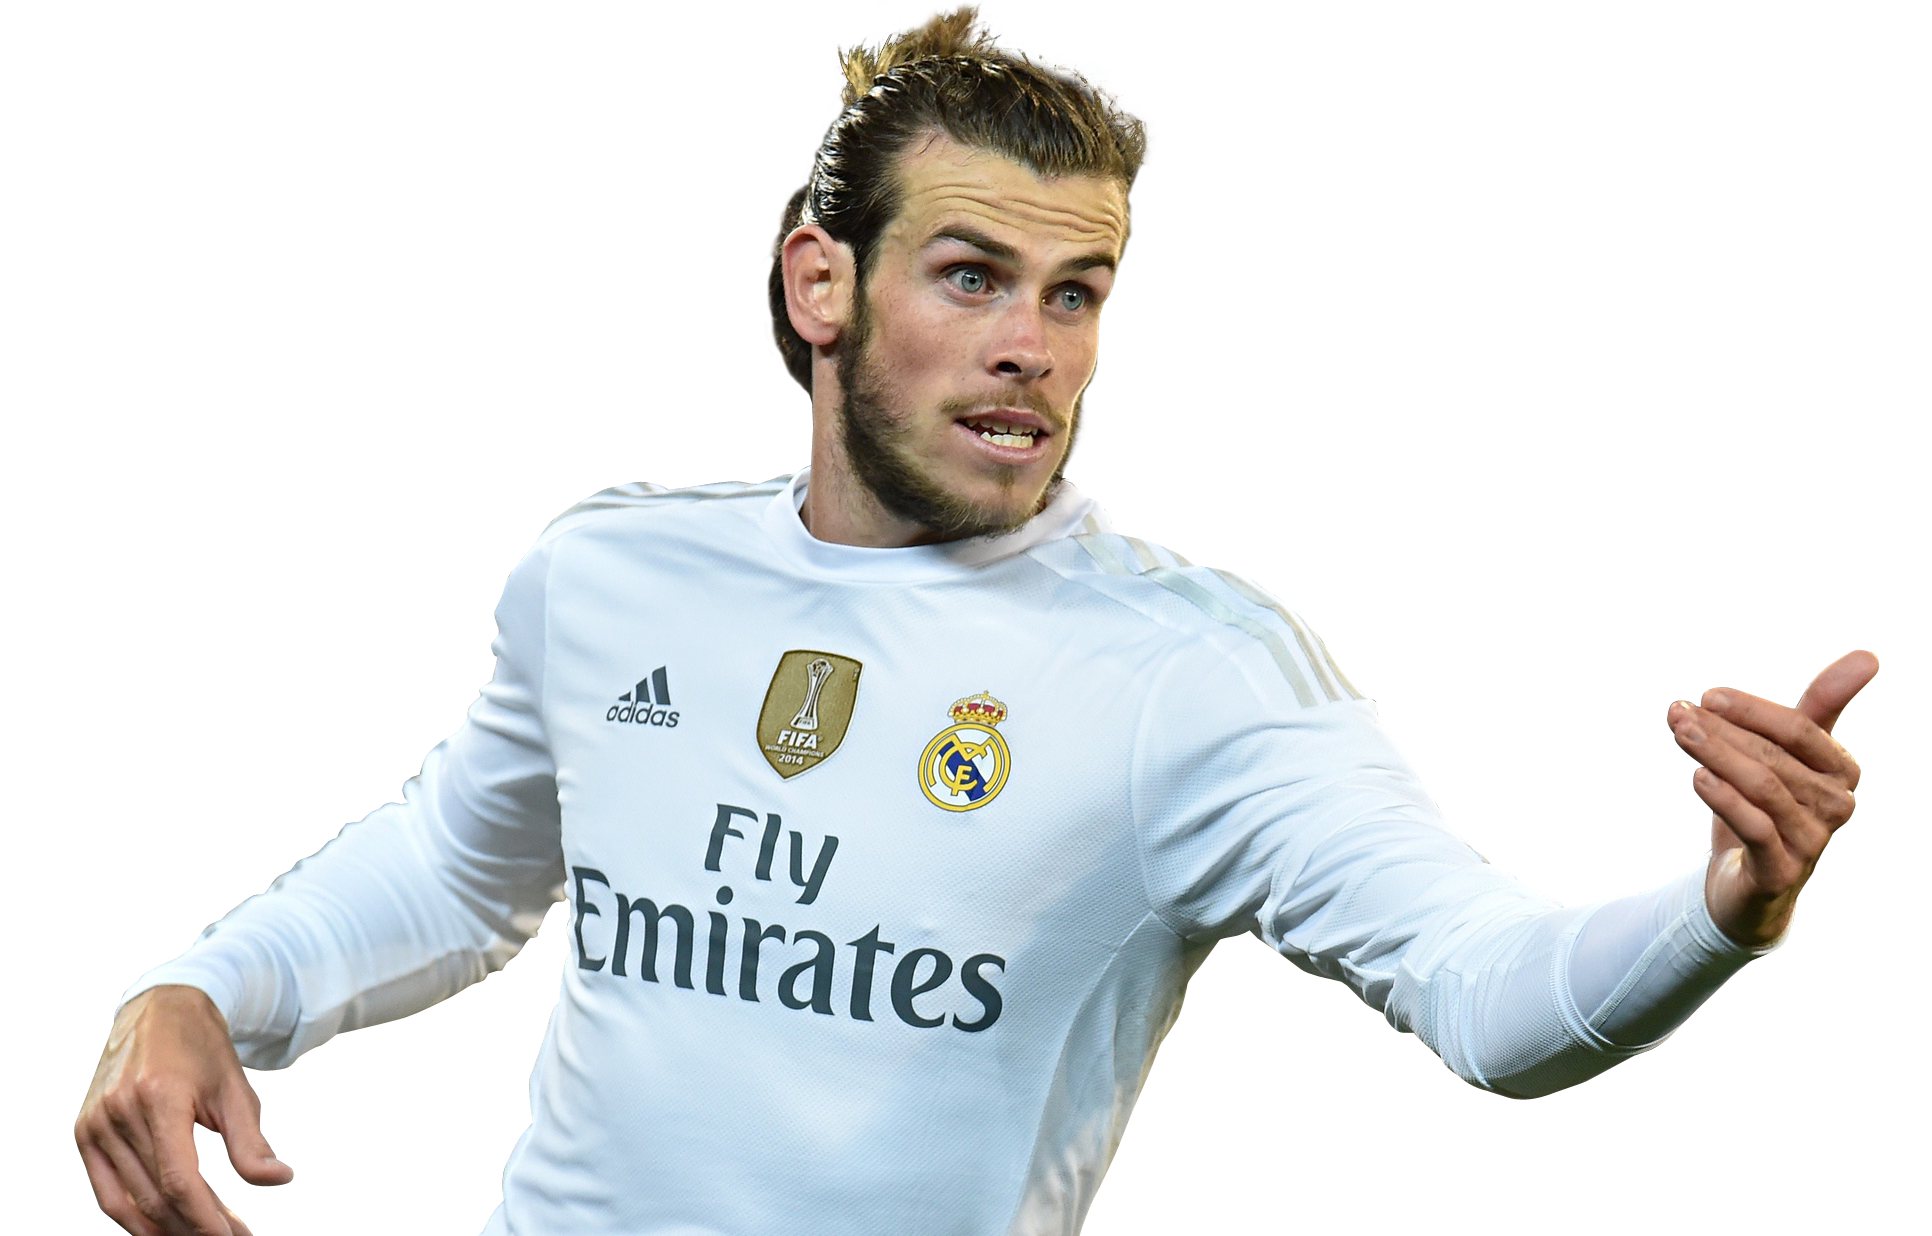 Download PNG image - Gareth Bale Footballer PNG Free Download 